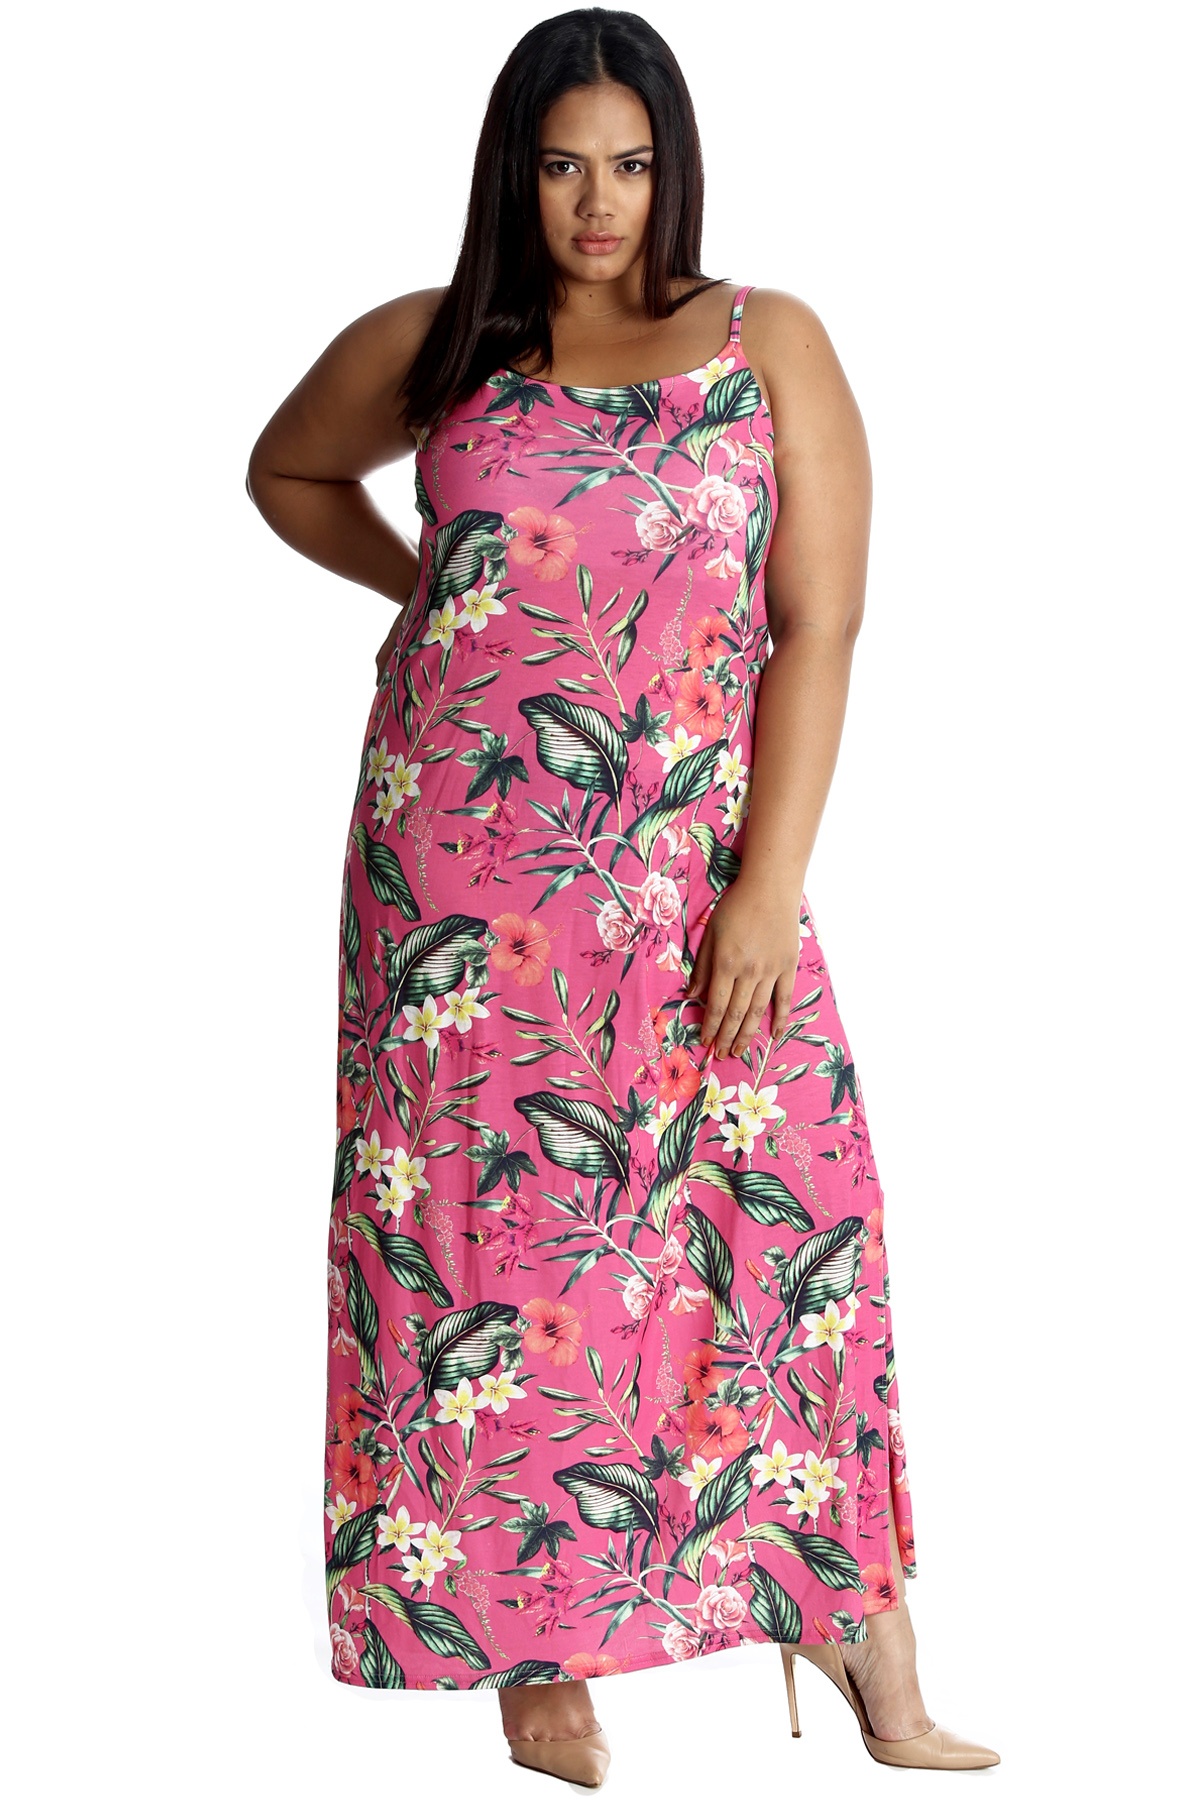 New Womens Dress Plus Size Ladies Maxi Floral Print Sleeveless Cami ...